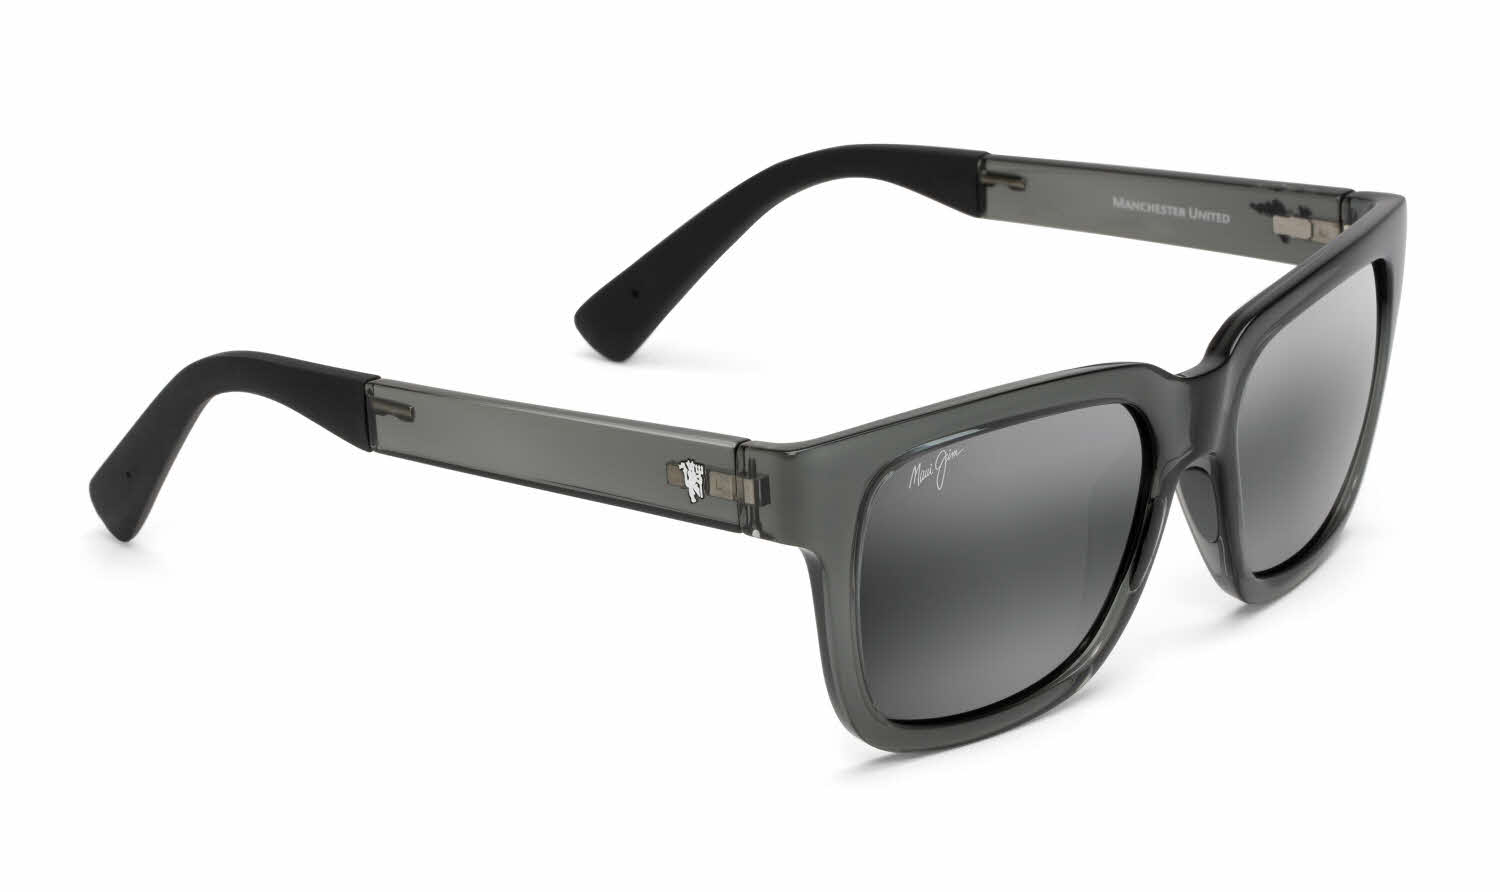 Maui Jim Mongoose-540 Sunglasses